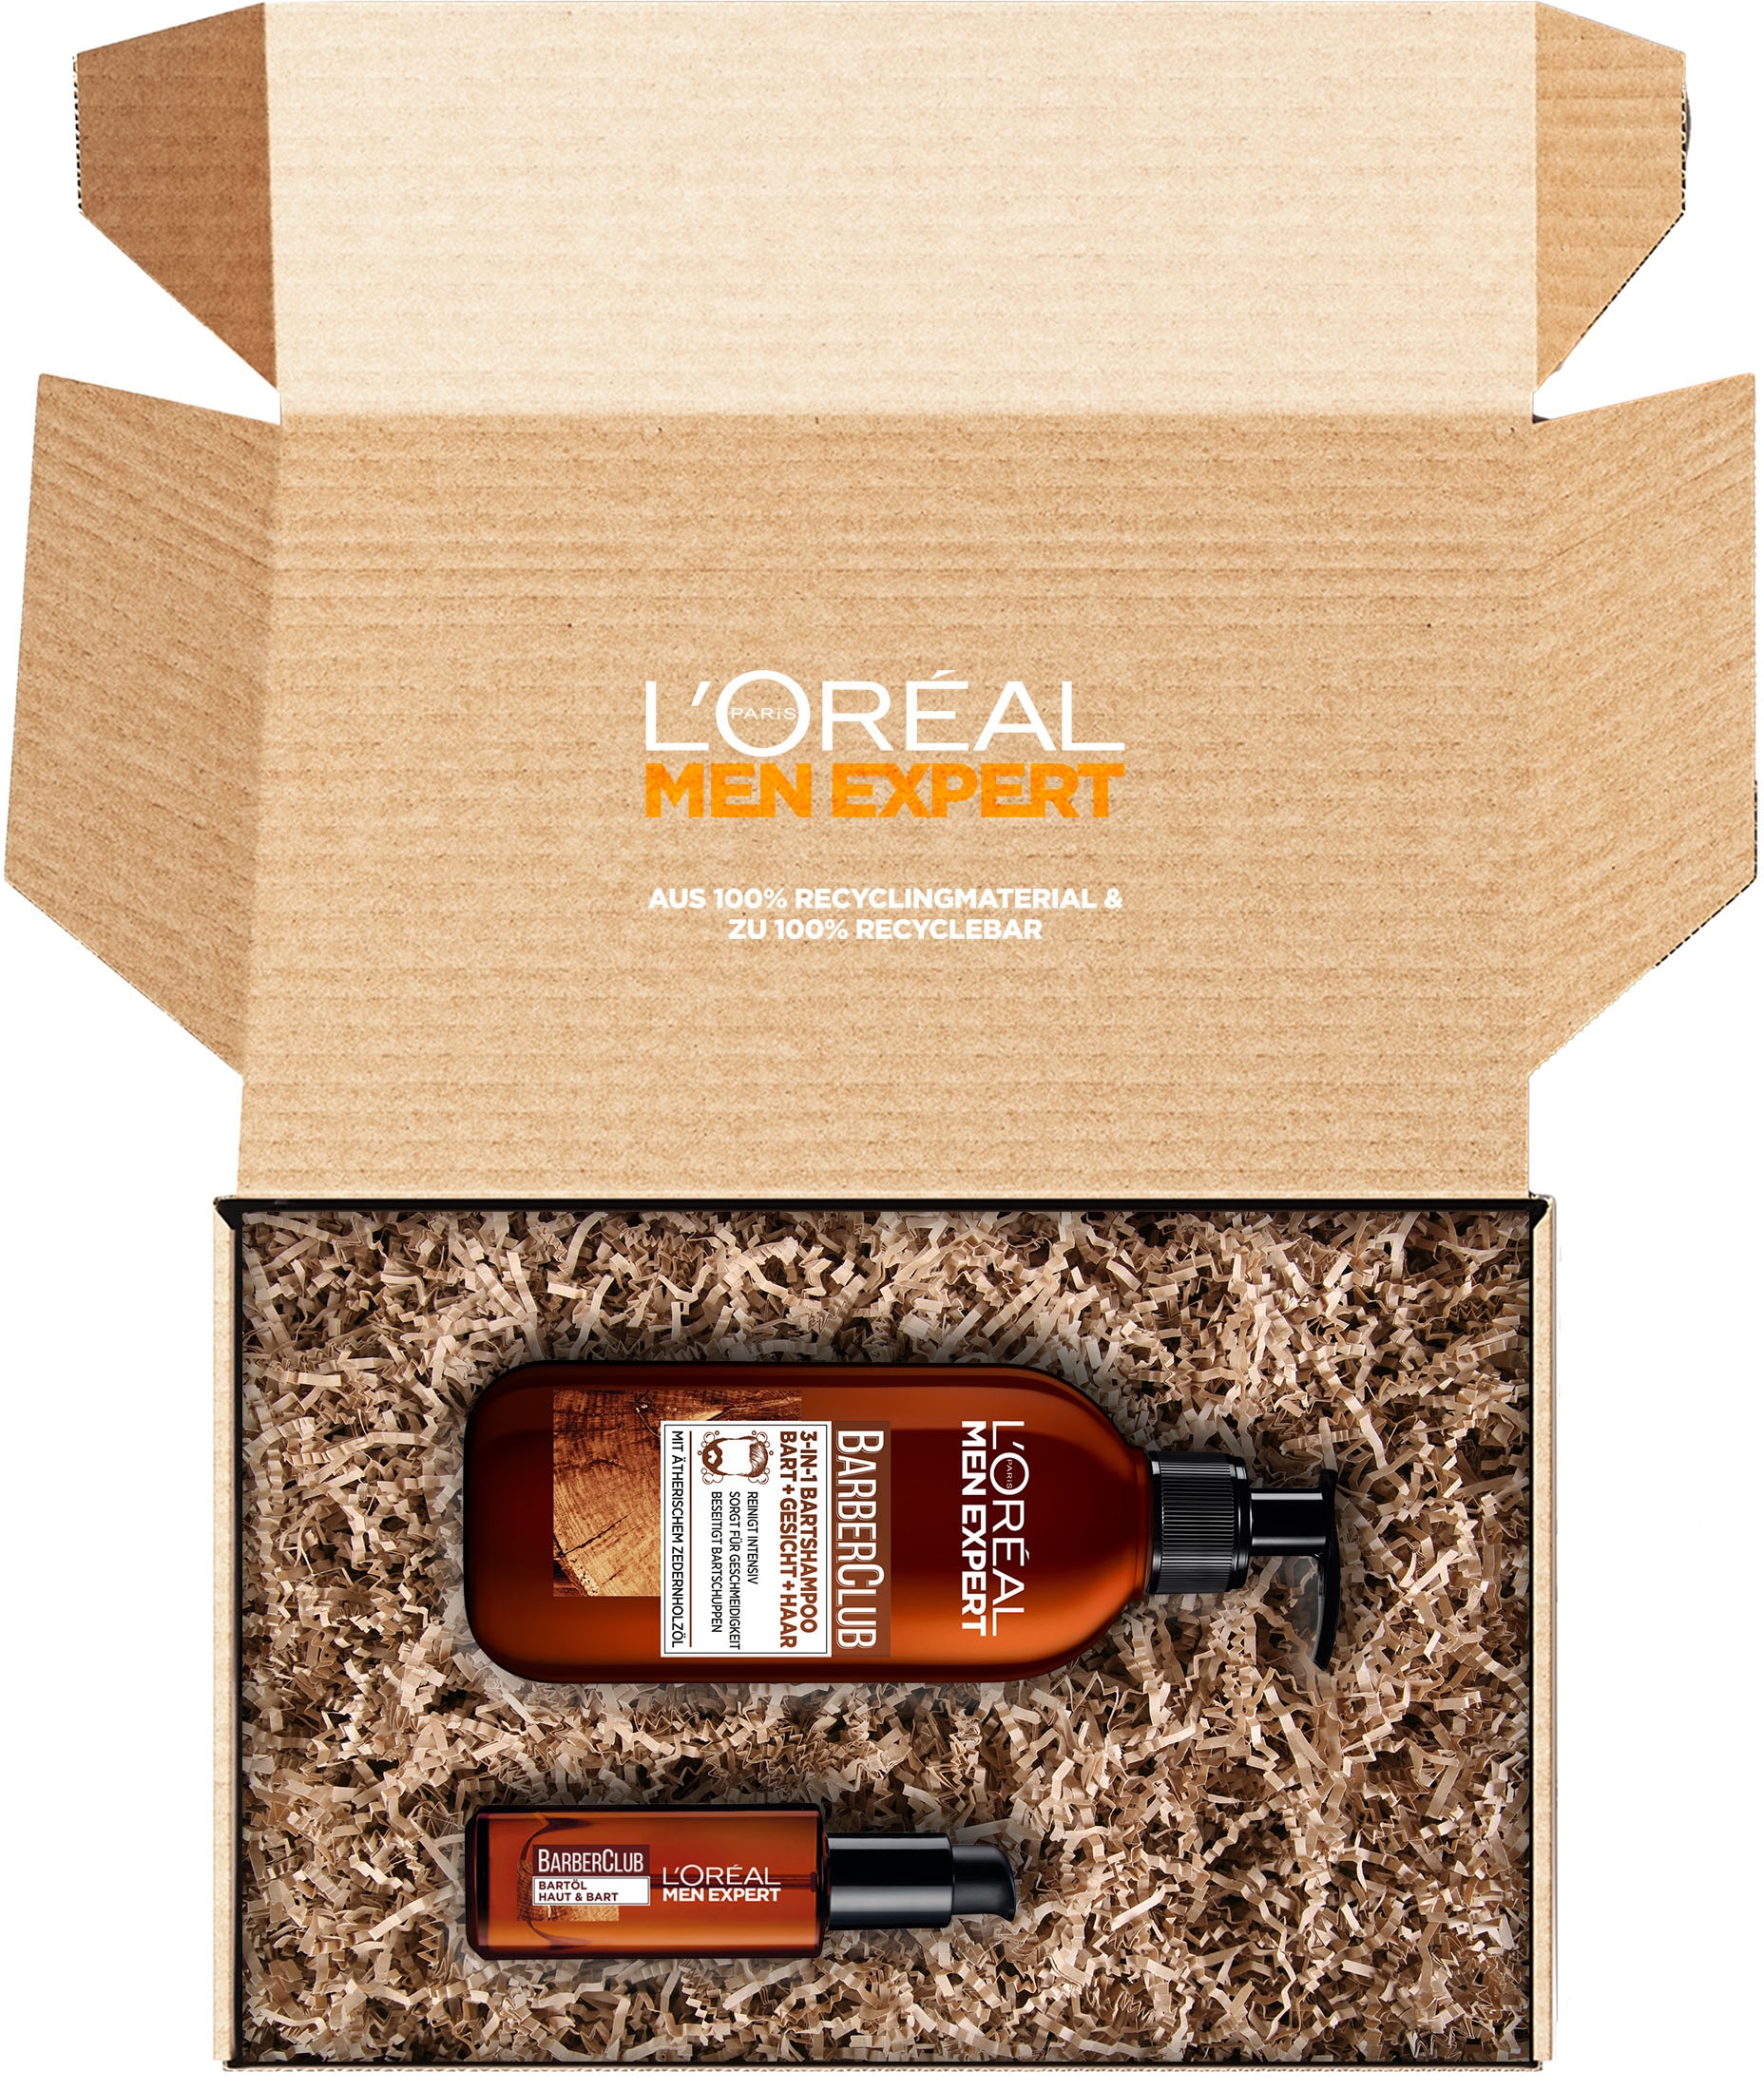 L'ORÉAL PARIS MEN EXPERT Bartpflege-Set »Barber Box«, (2 tlg.), Nachhaltige Box: 100 % Recyclingmaterial, 100 % recycelbar